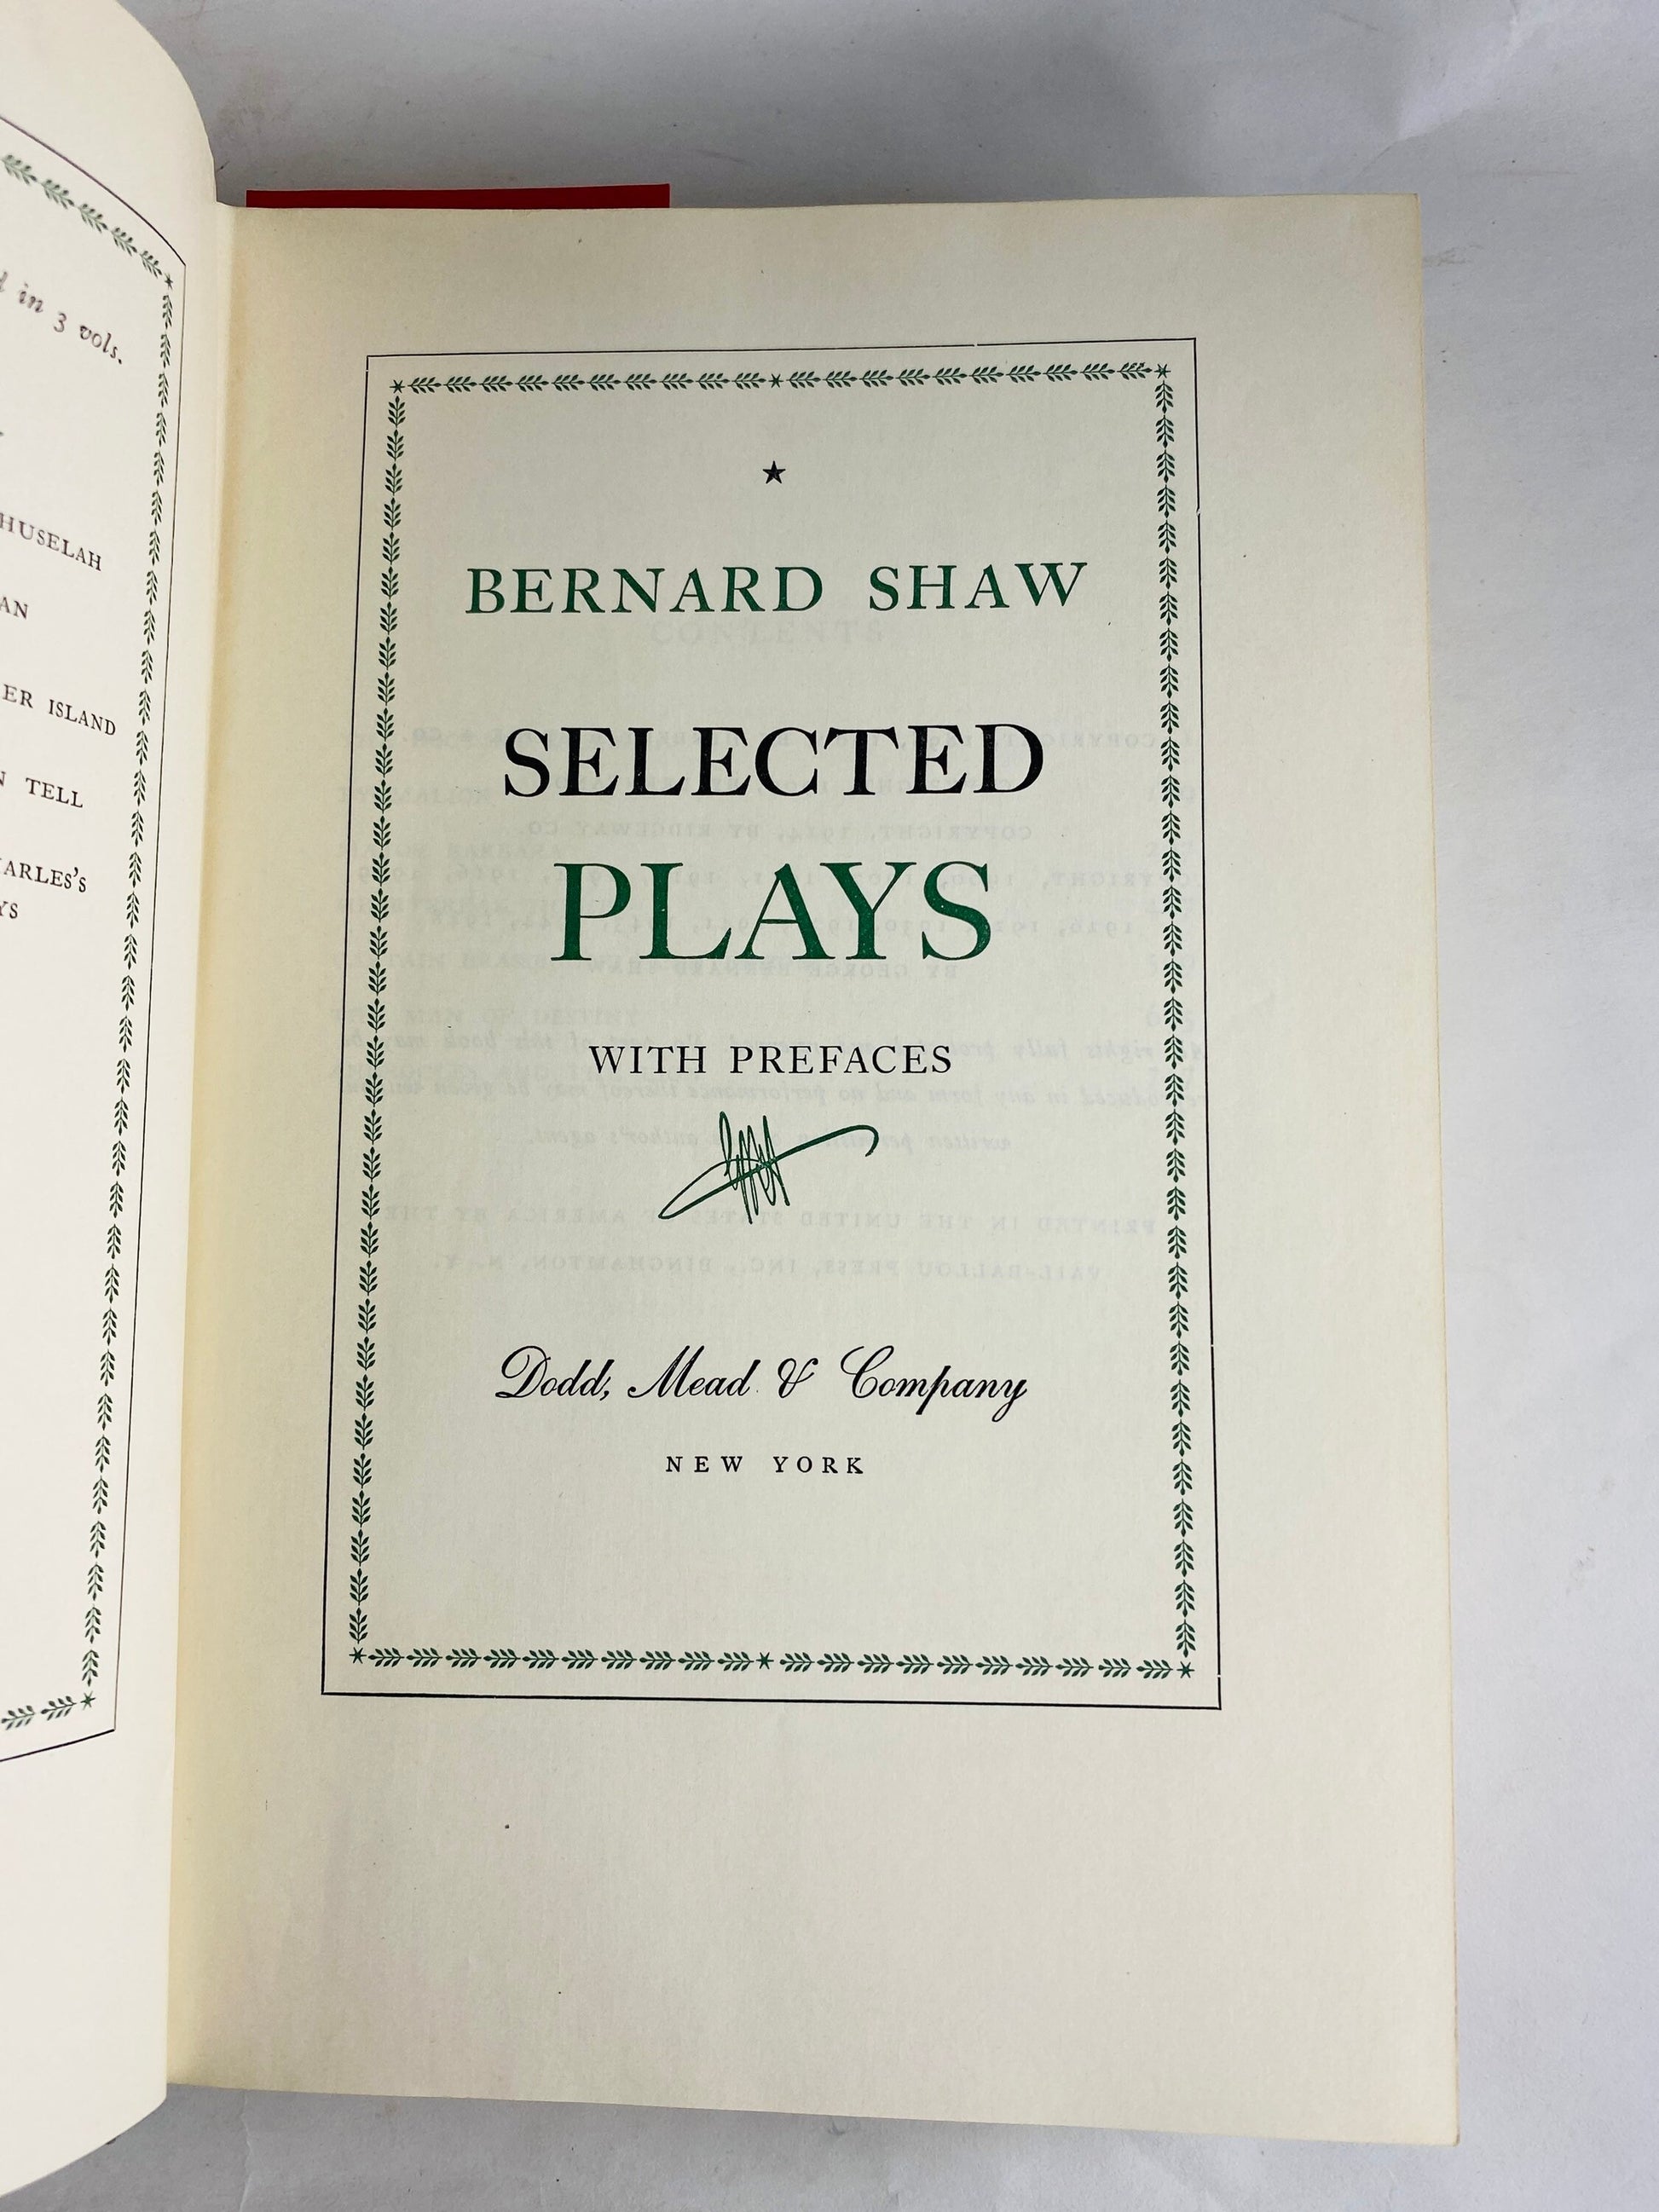 George Bernard Shaw vintage book of plays circa 1947. Theatre green bookshelf decor